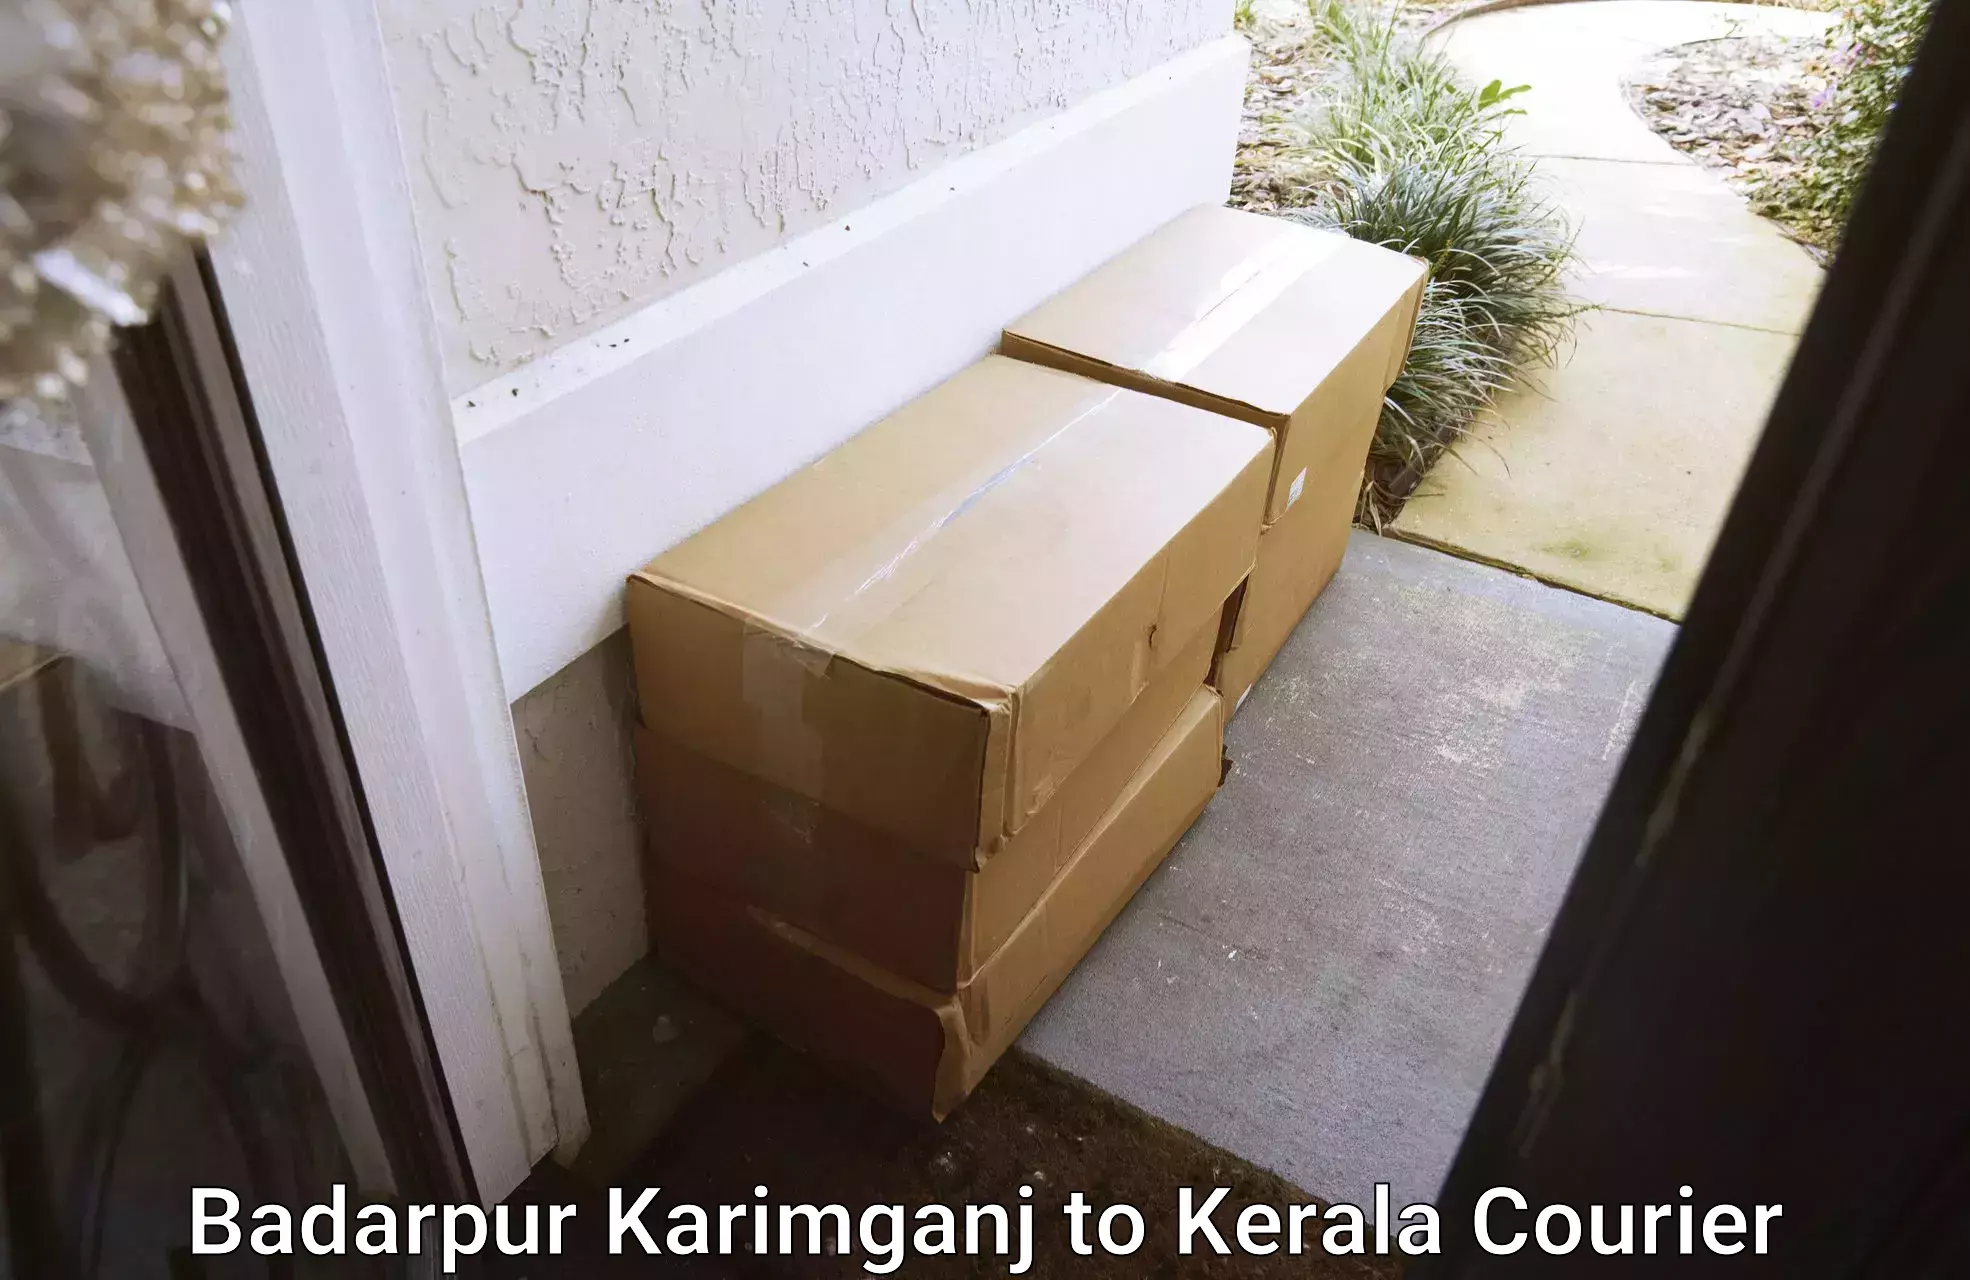 Multi-city courier Badarpur Karimganj to Thrissur